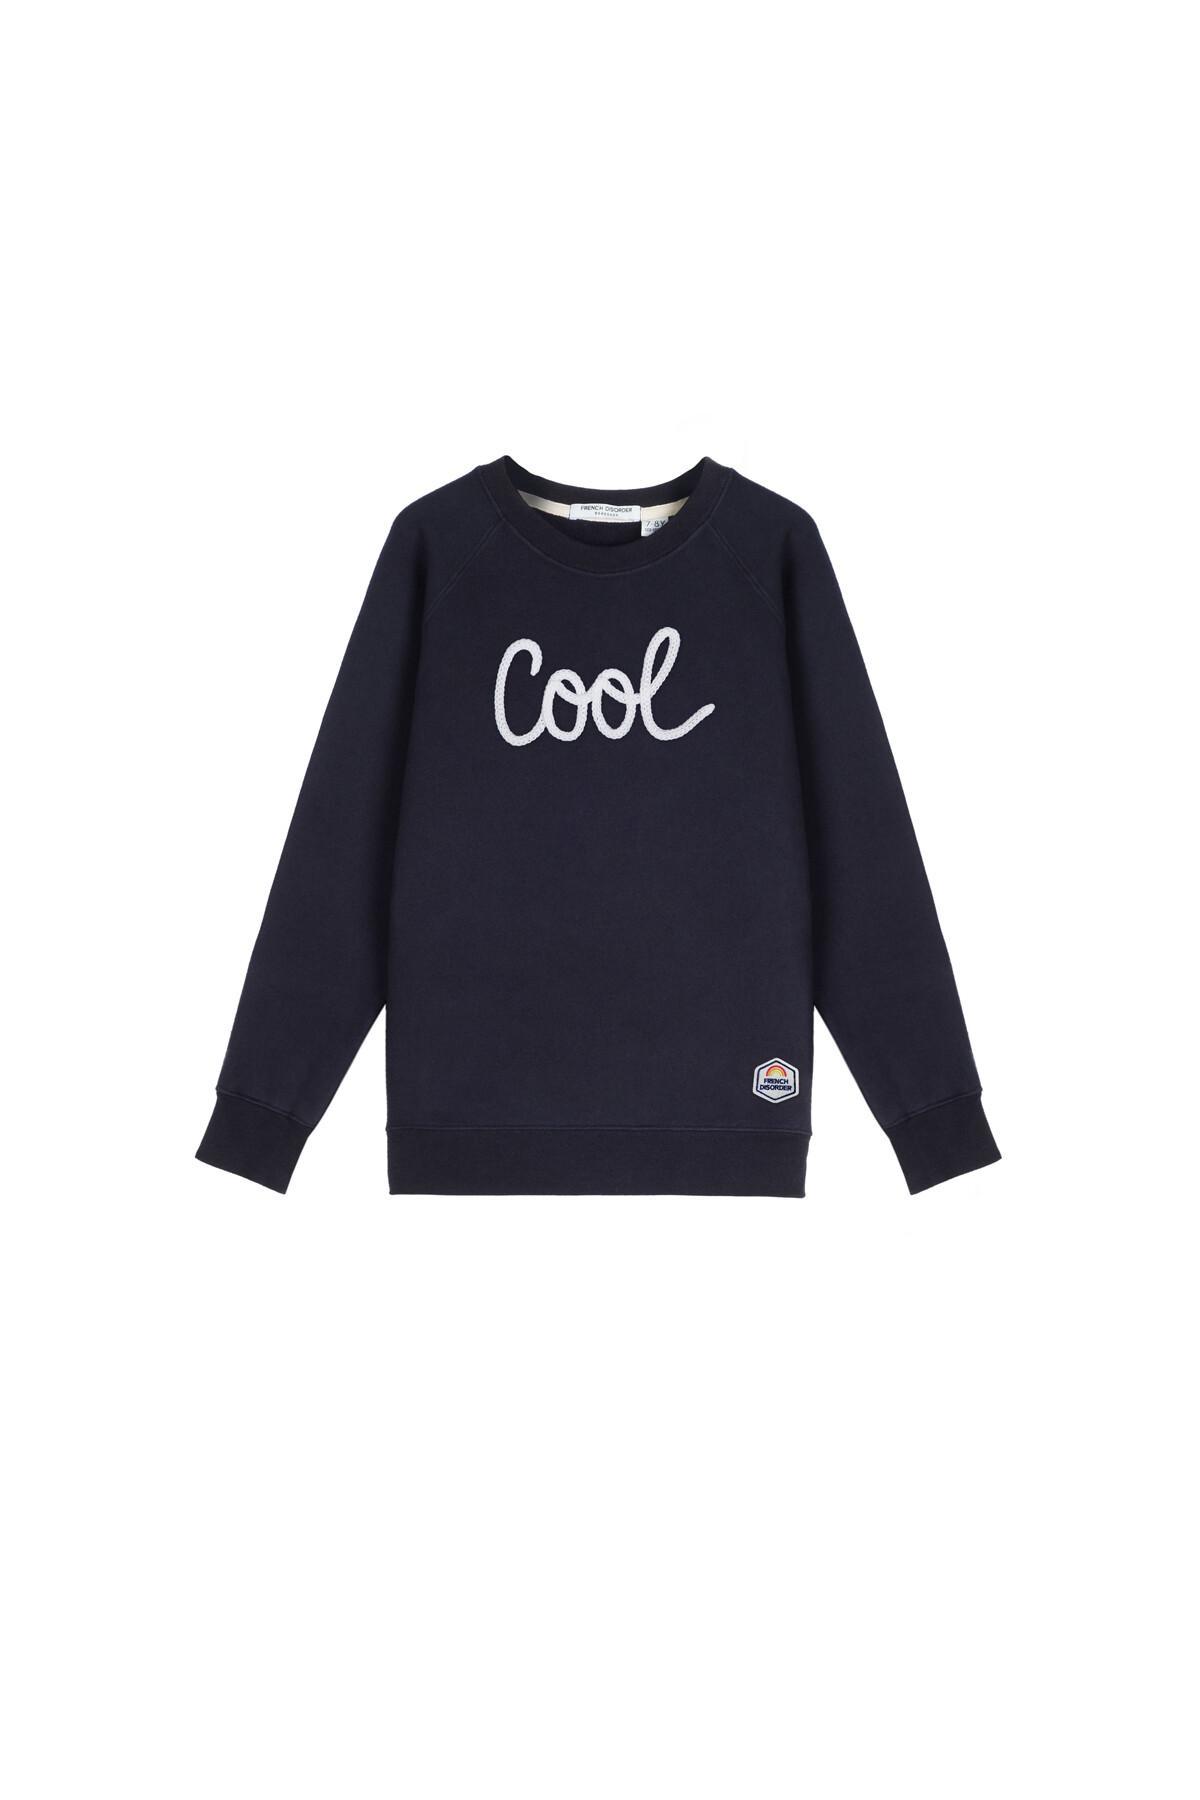 Sweatshirt enfant French Disorder Cool